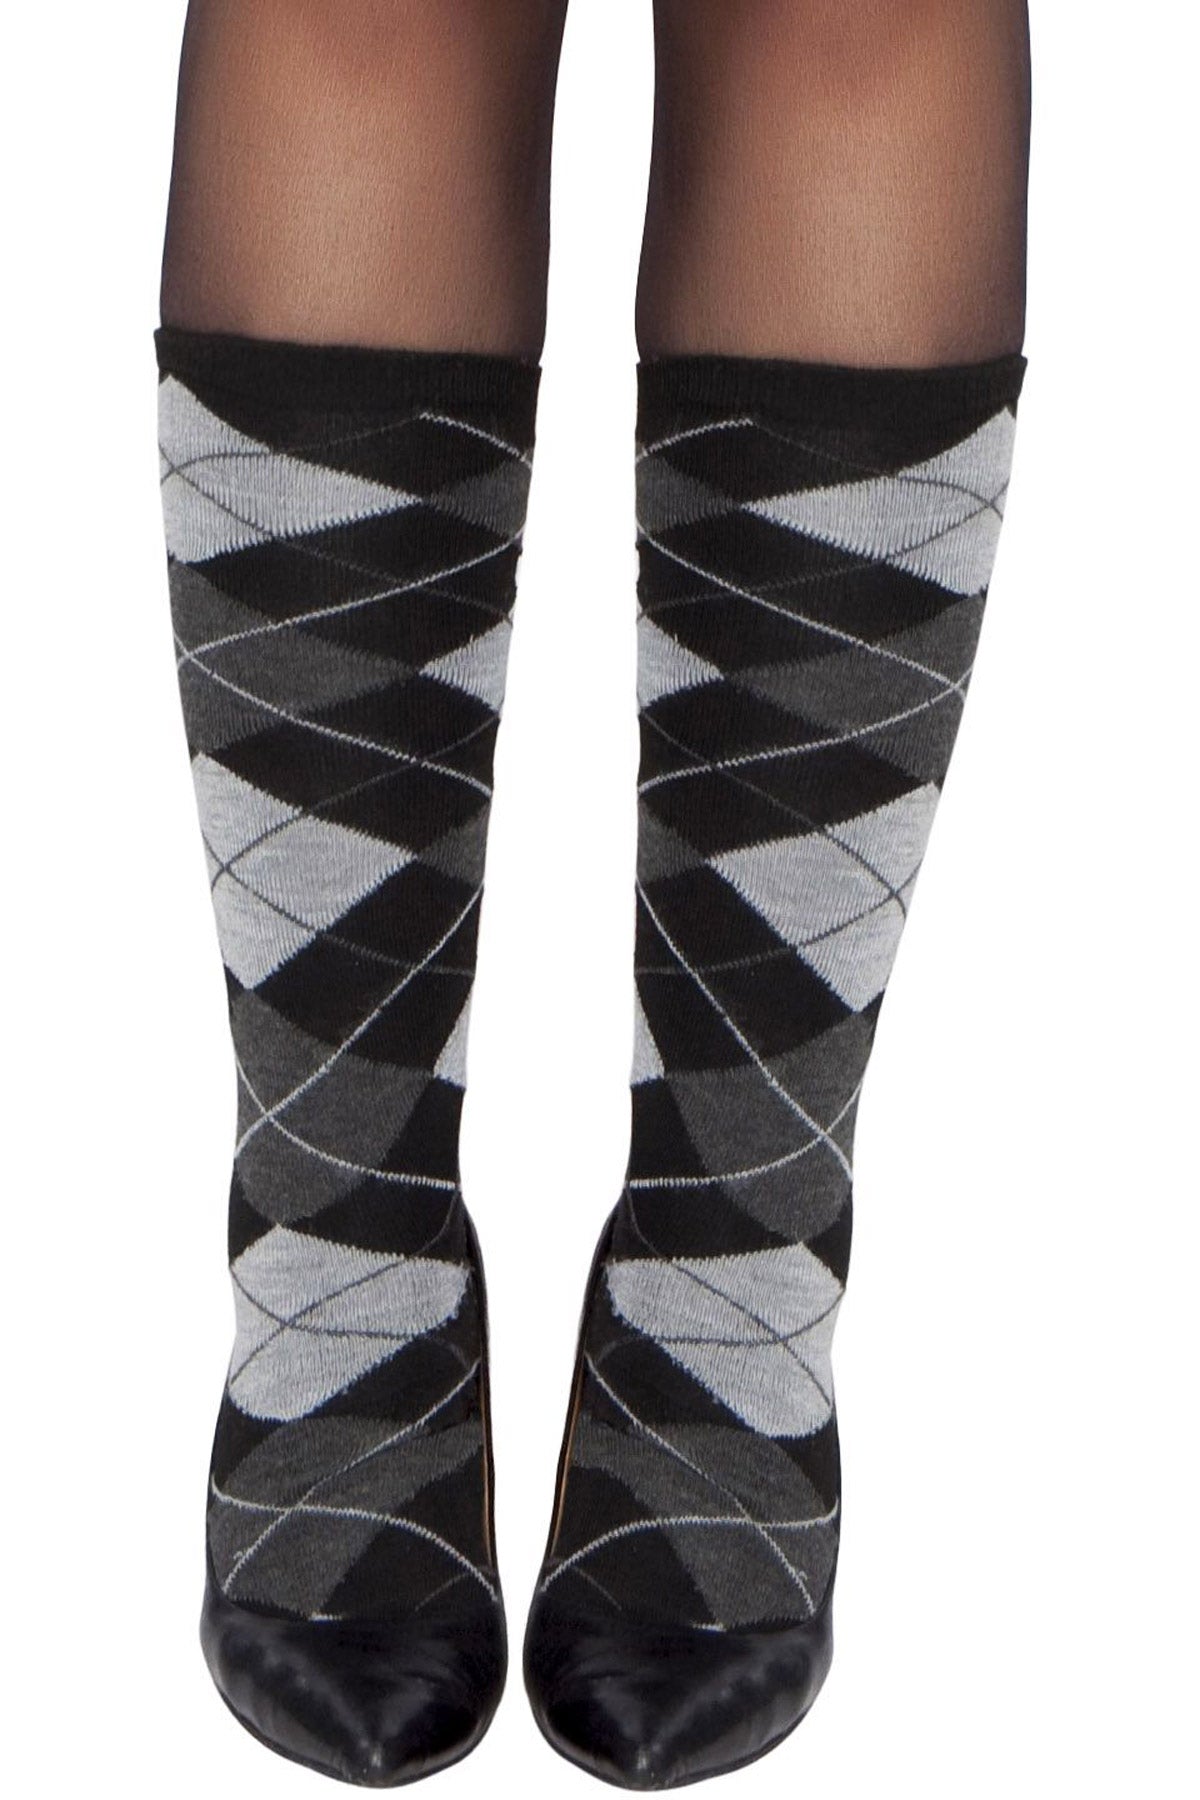 School Girl Nerd Grey Argyle Knee High Socks Roma  STC108